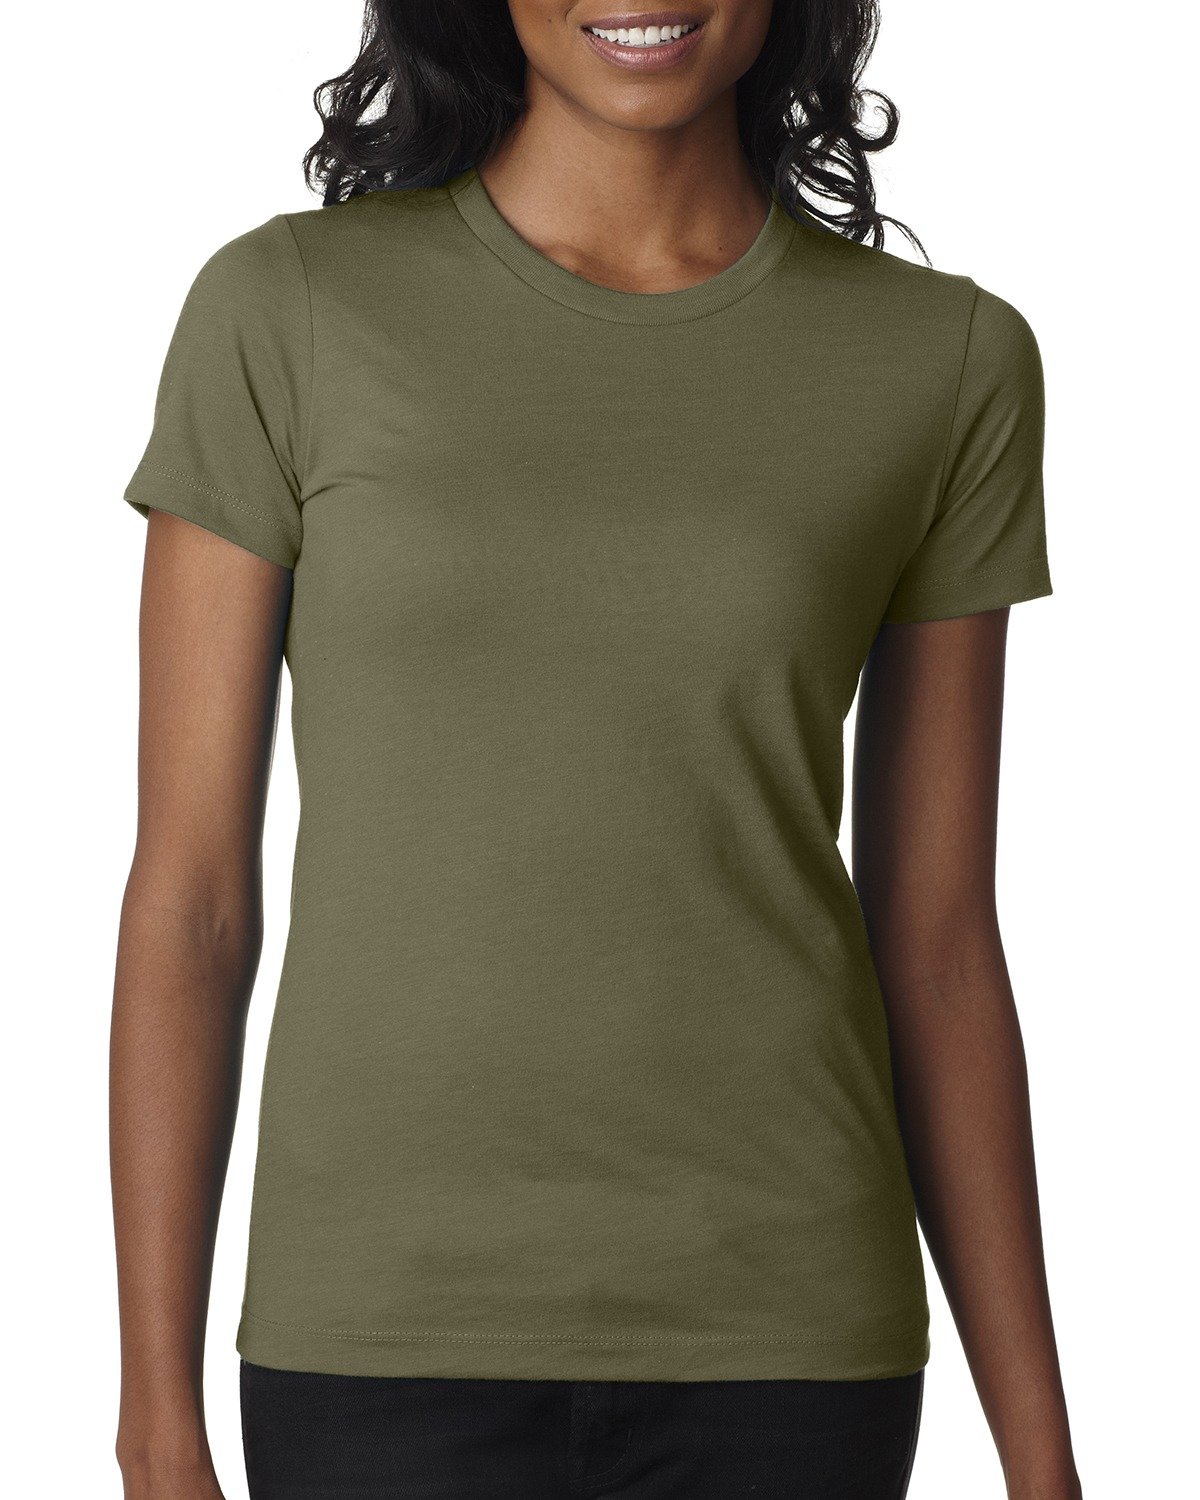 Next Level Apparel Ladies' CVC T-Shirt MILITARY GREEN 